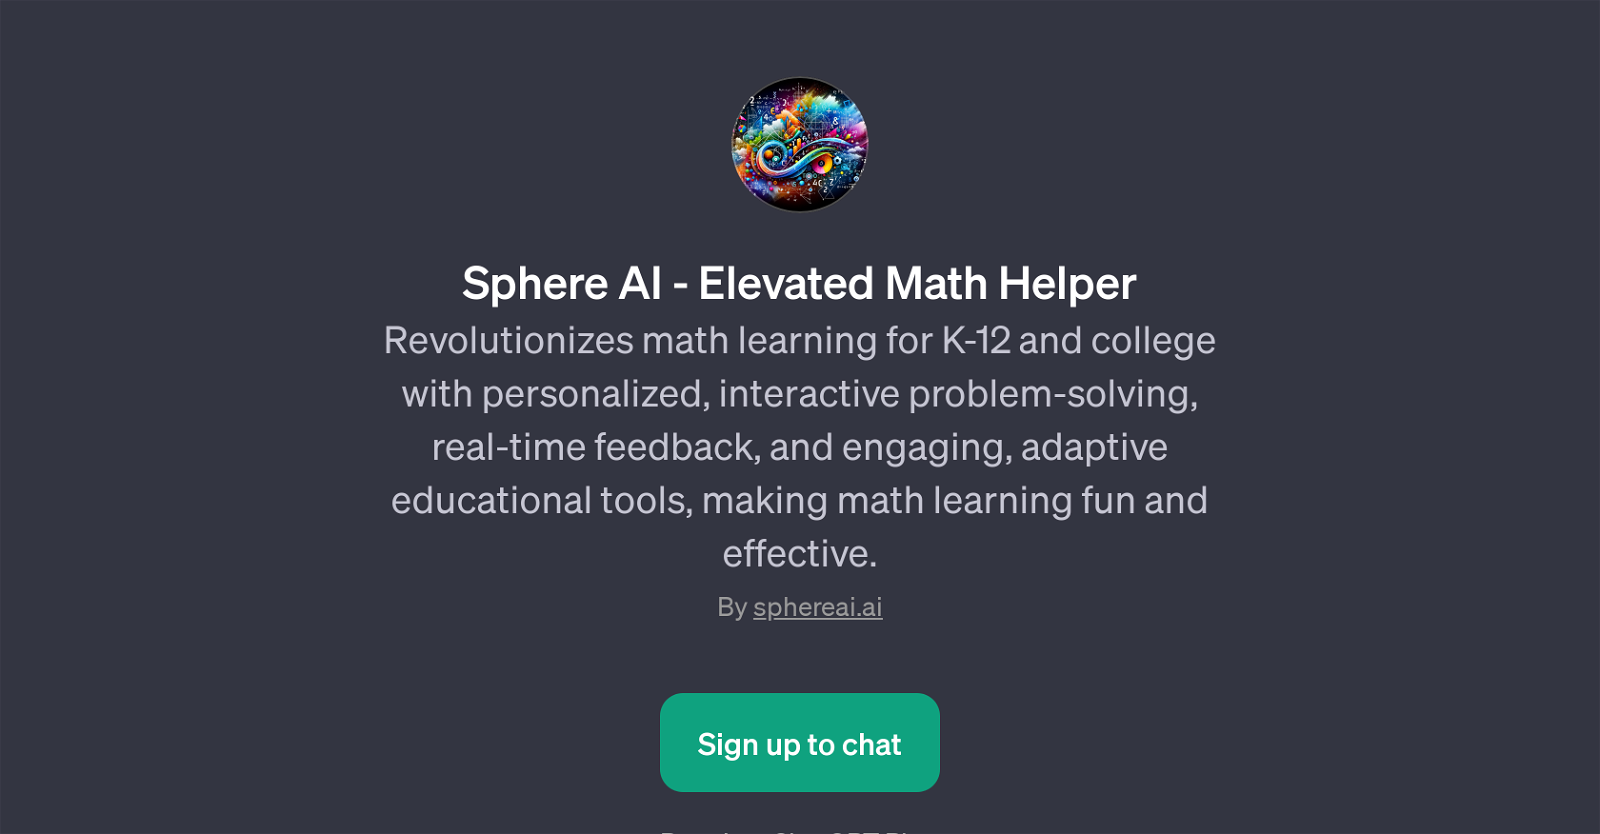 Sphere AI - Elevated Math Helper website